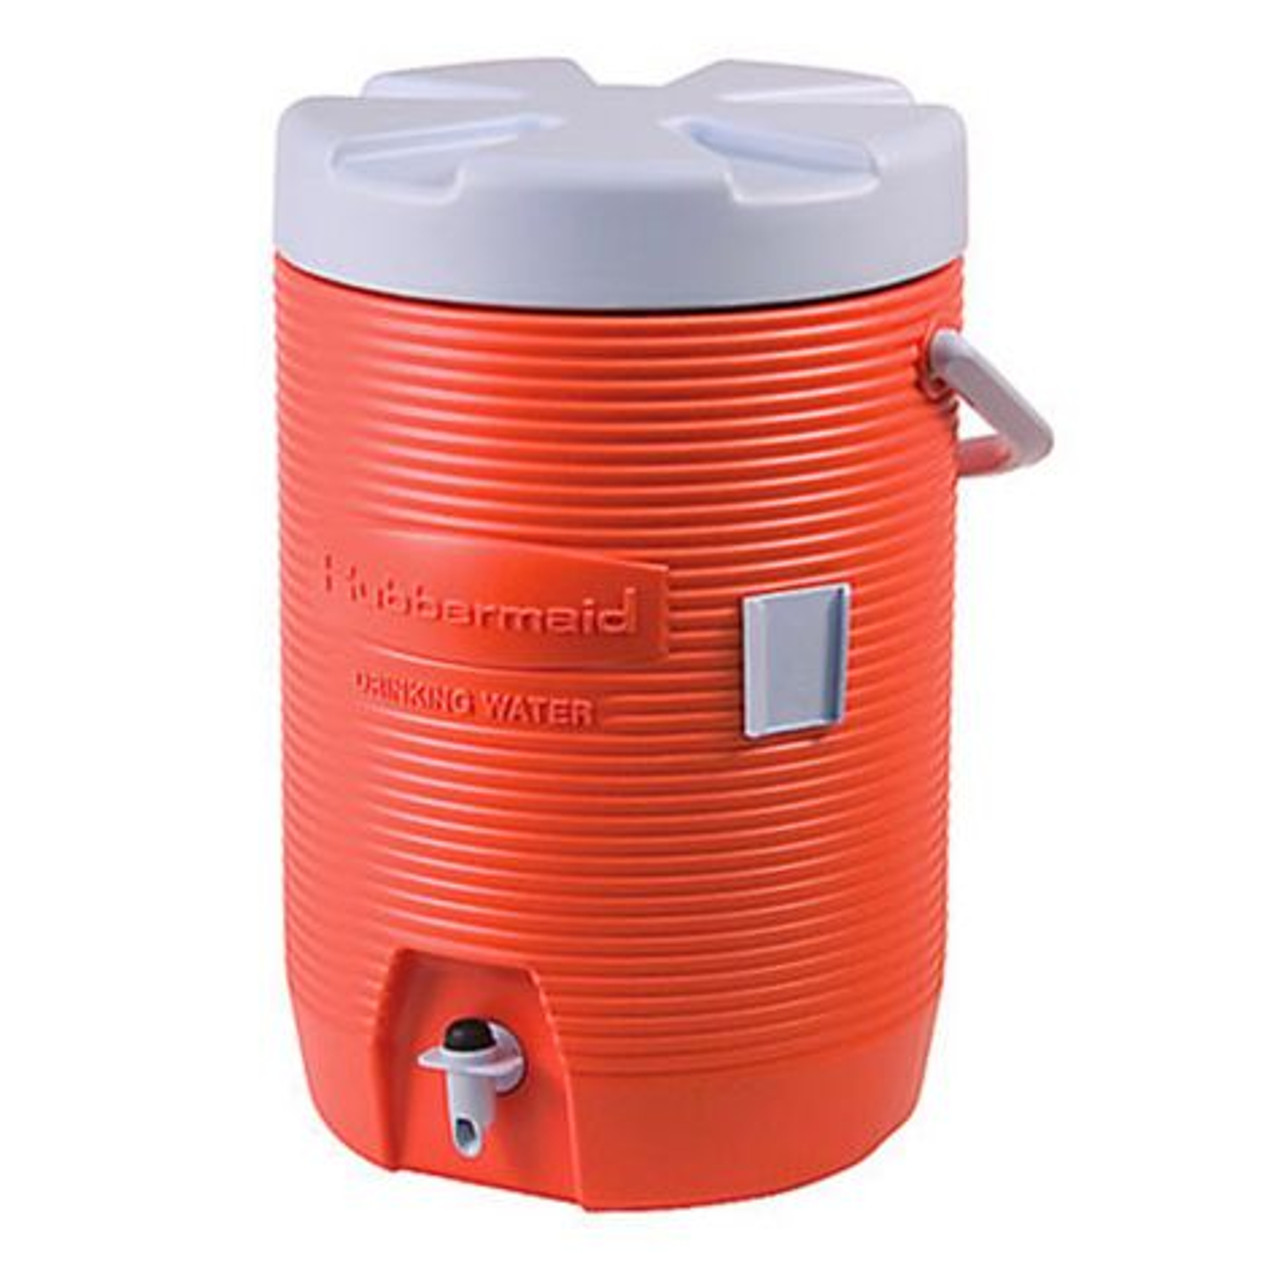 Rubbermaid Insulated Beverage Container - 3 Gallon - Orange